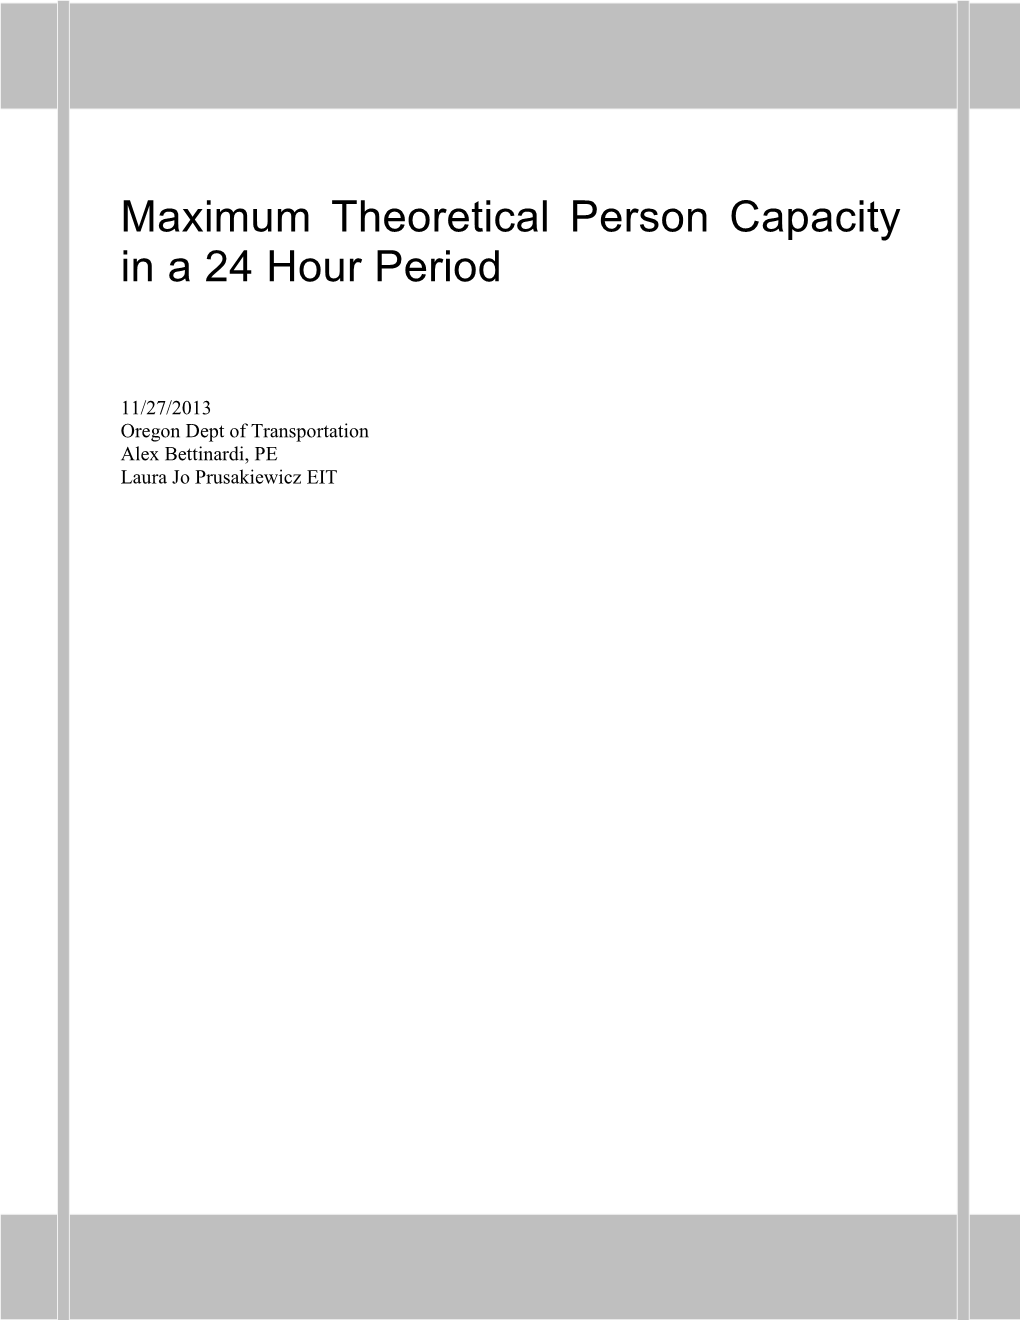 Maximum Theoretical Person Capacity in a 24 Hour Period